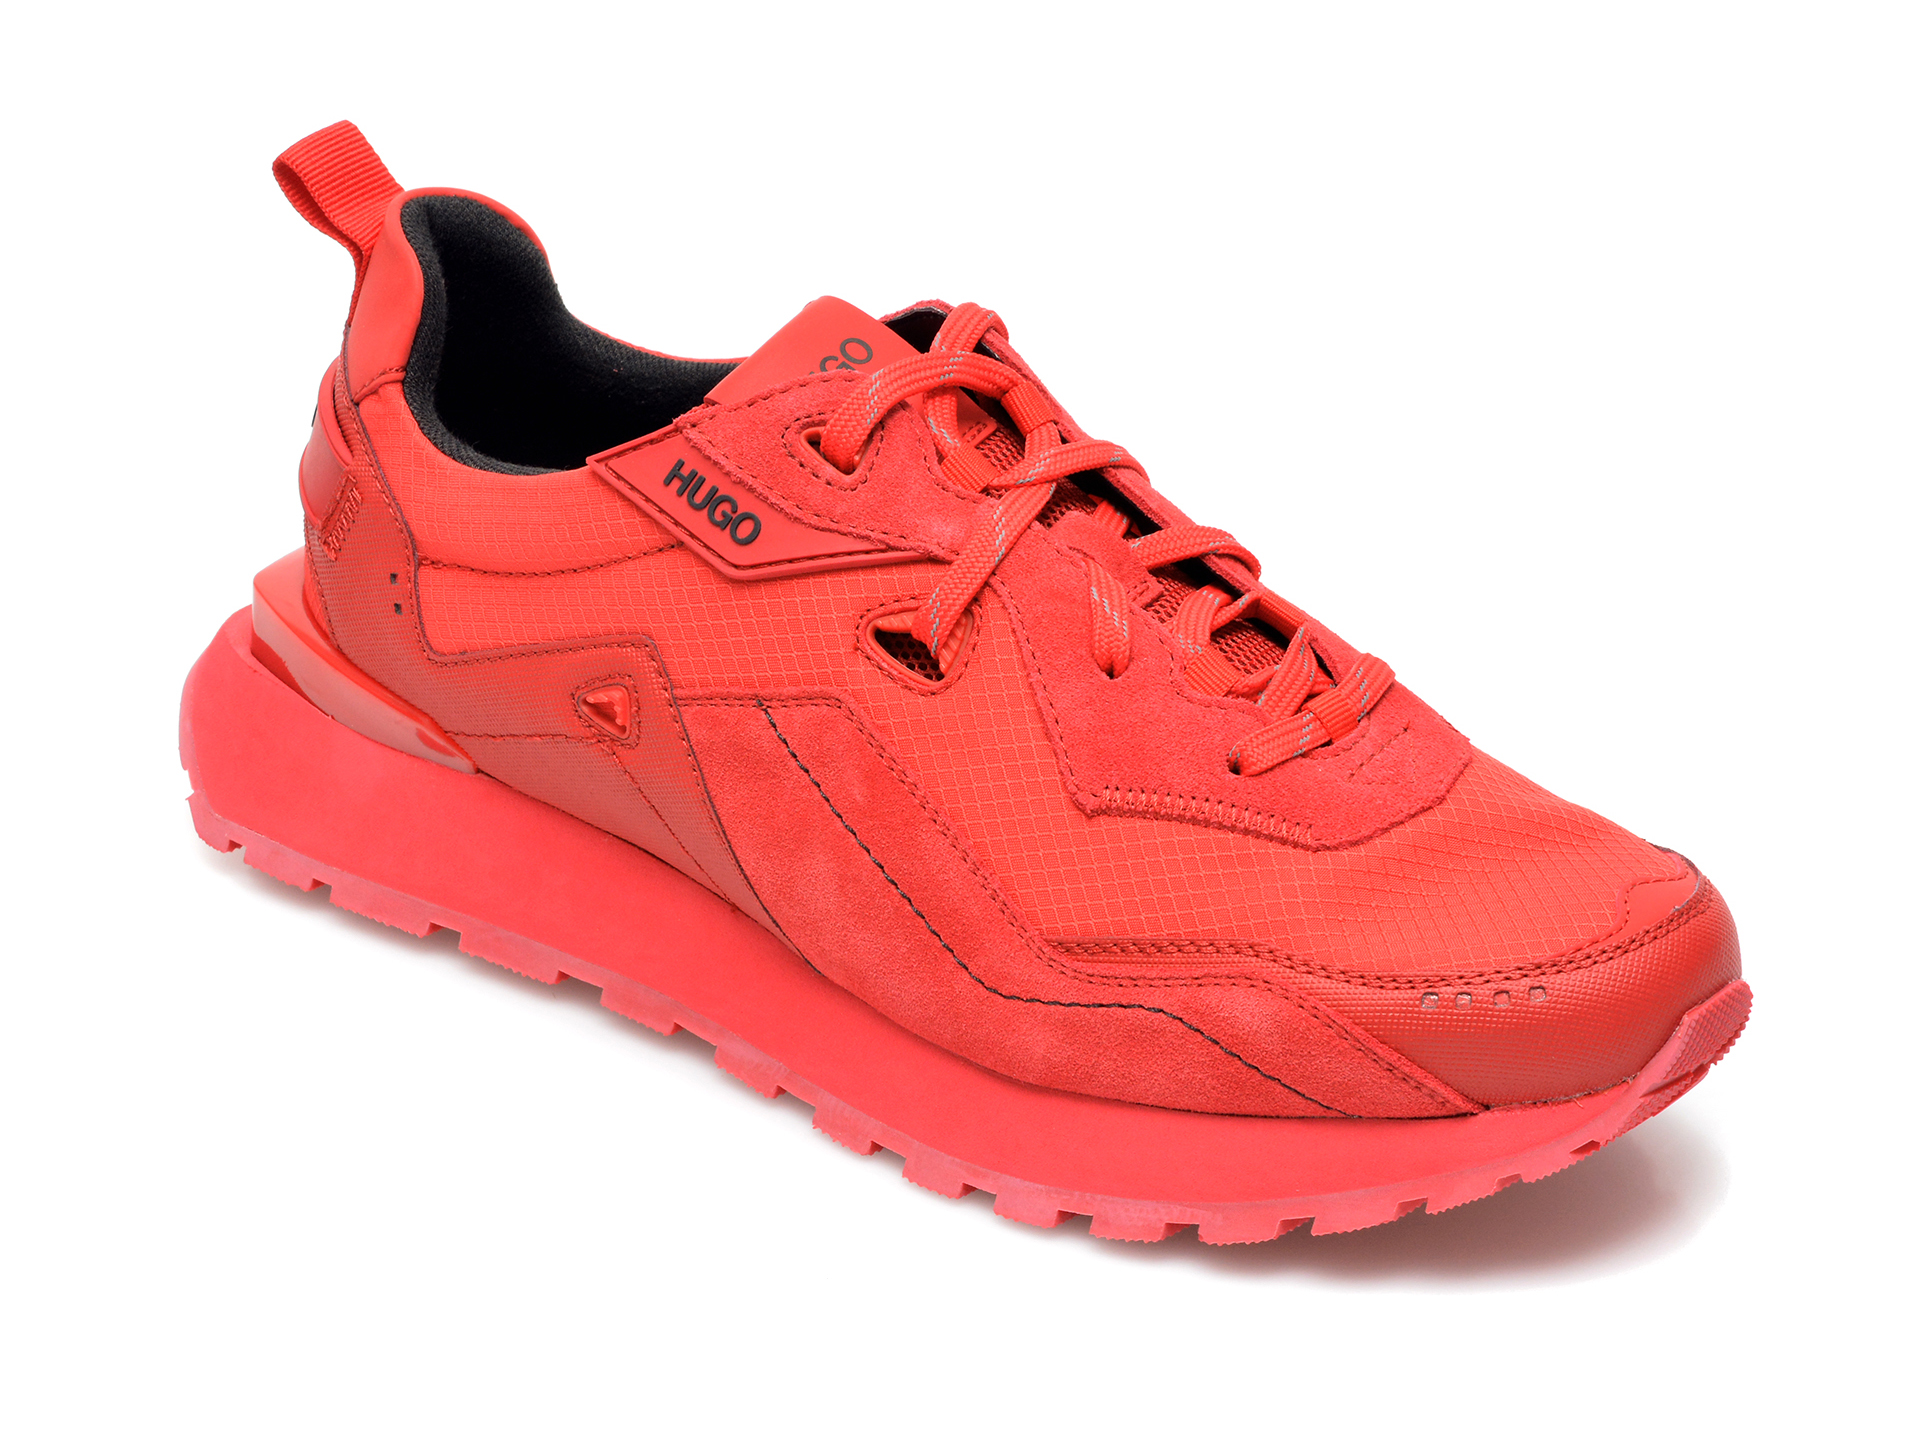 Pantofi sport HUGO BOSS rosii, 5689, din material textil si piele intoarsa Hugo Boss